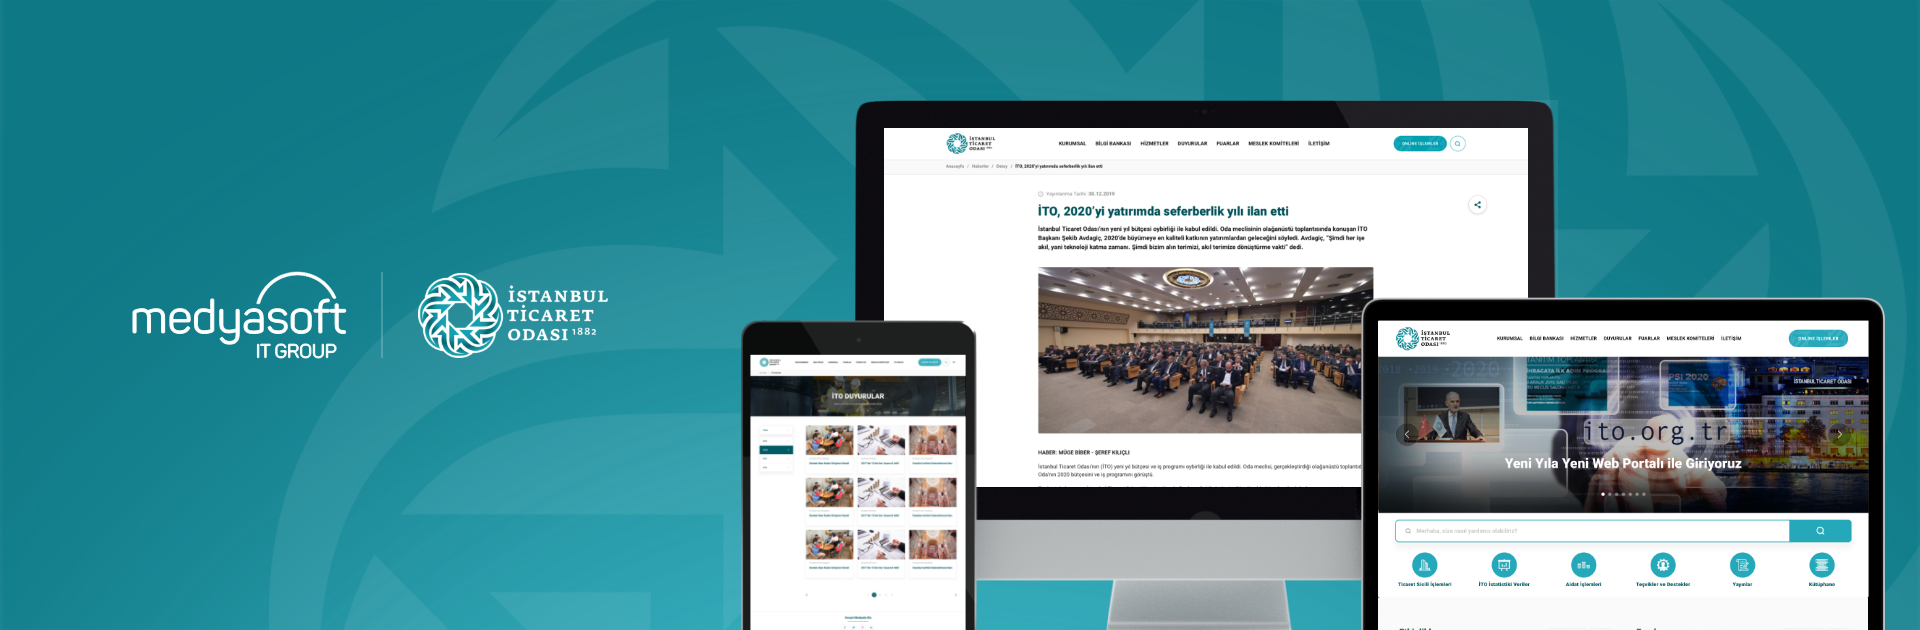 İTO Corporate Web Portal Project Goes Live